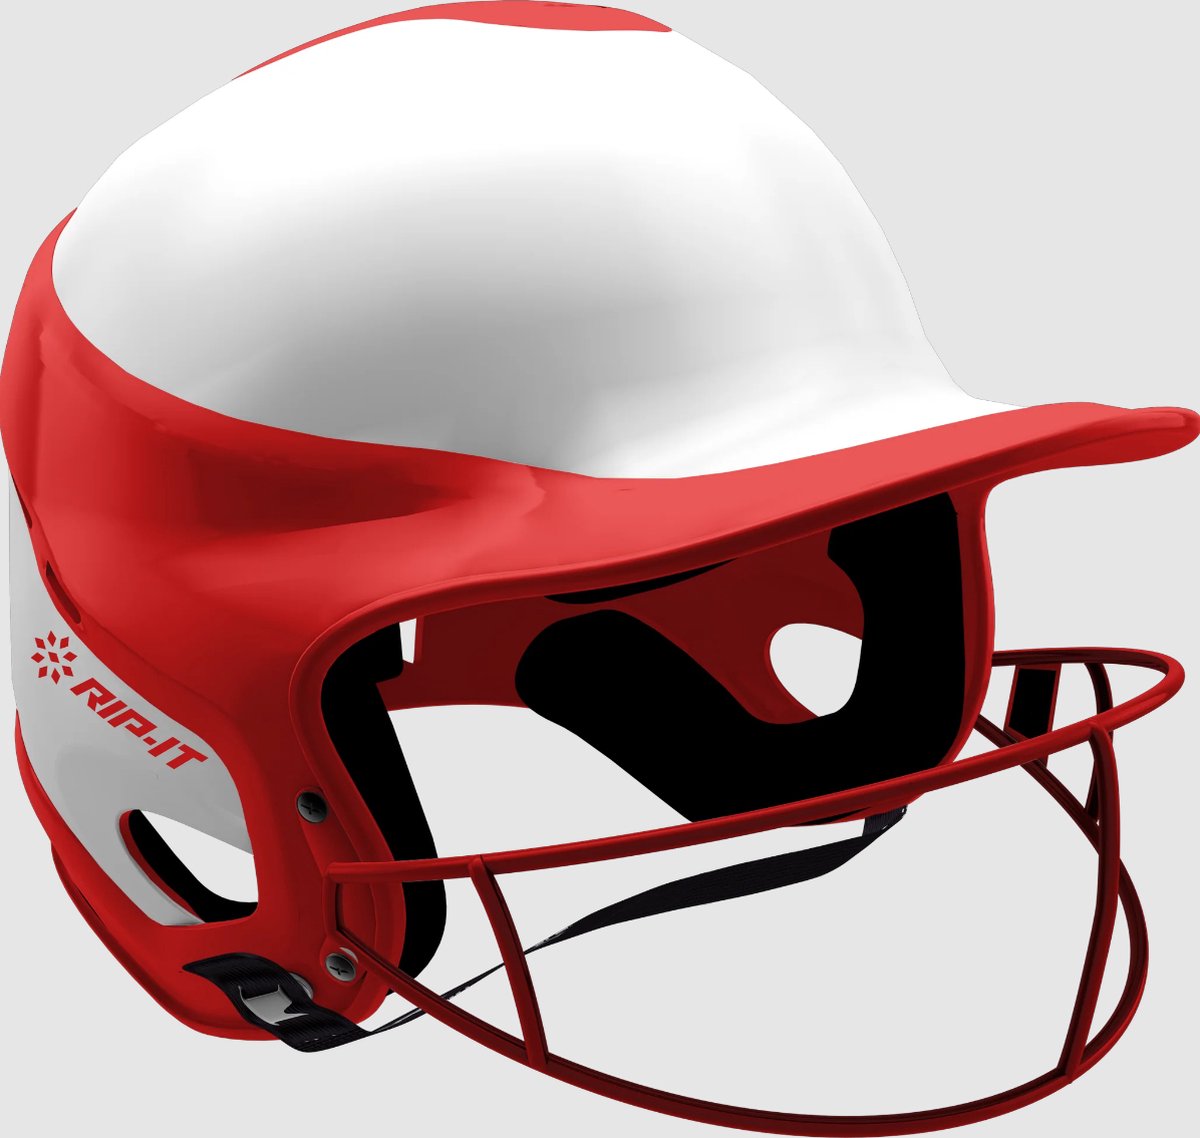 RIP-IT Vision Pro Softball Batting Helmet S/M Scarlet